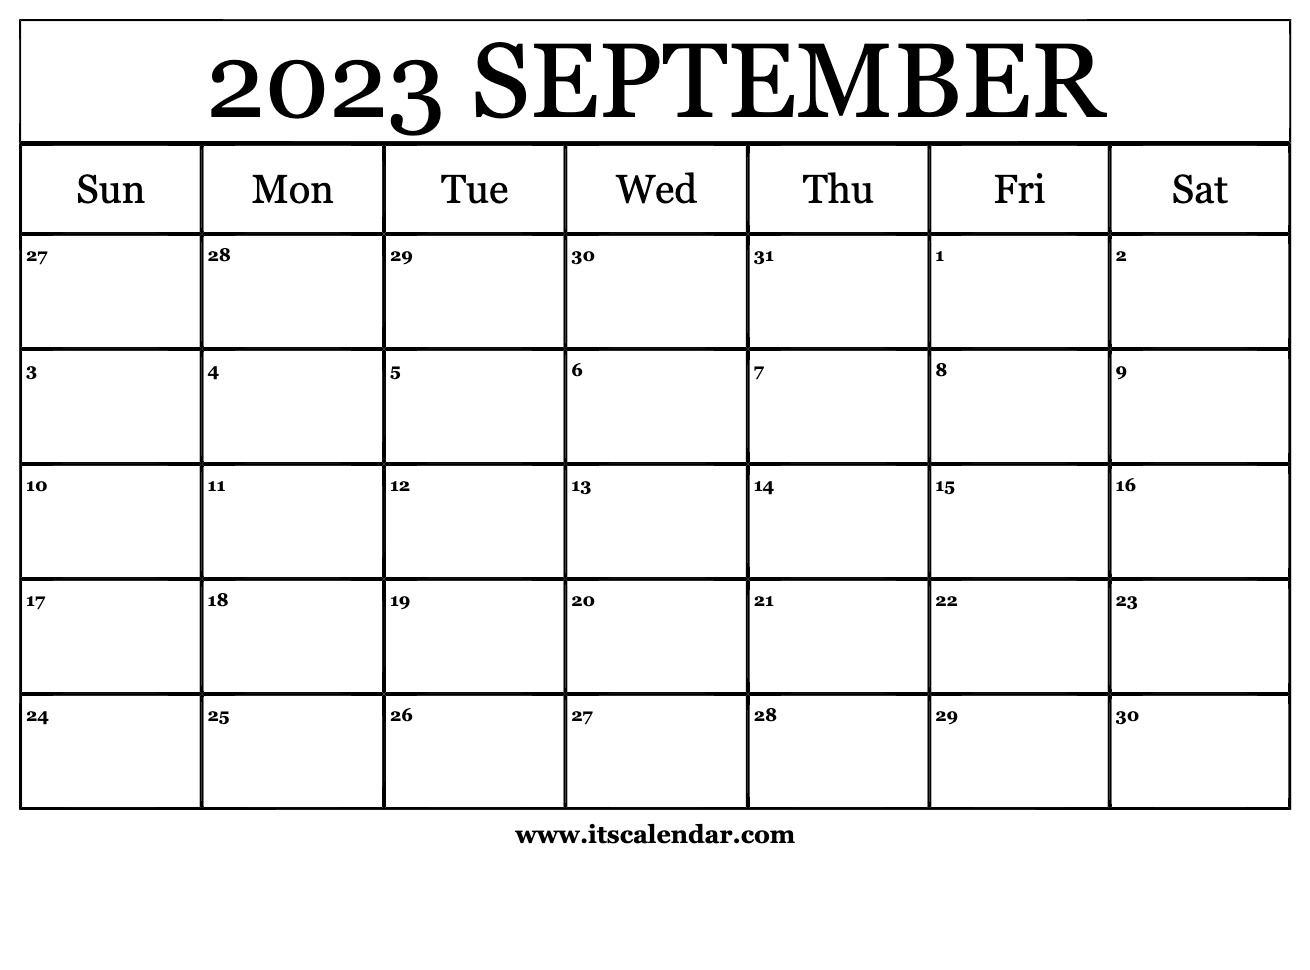 september-2023-calendar-free-printable-calendar-templates-september